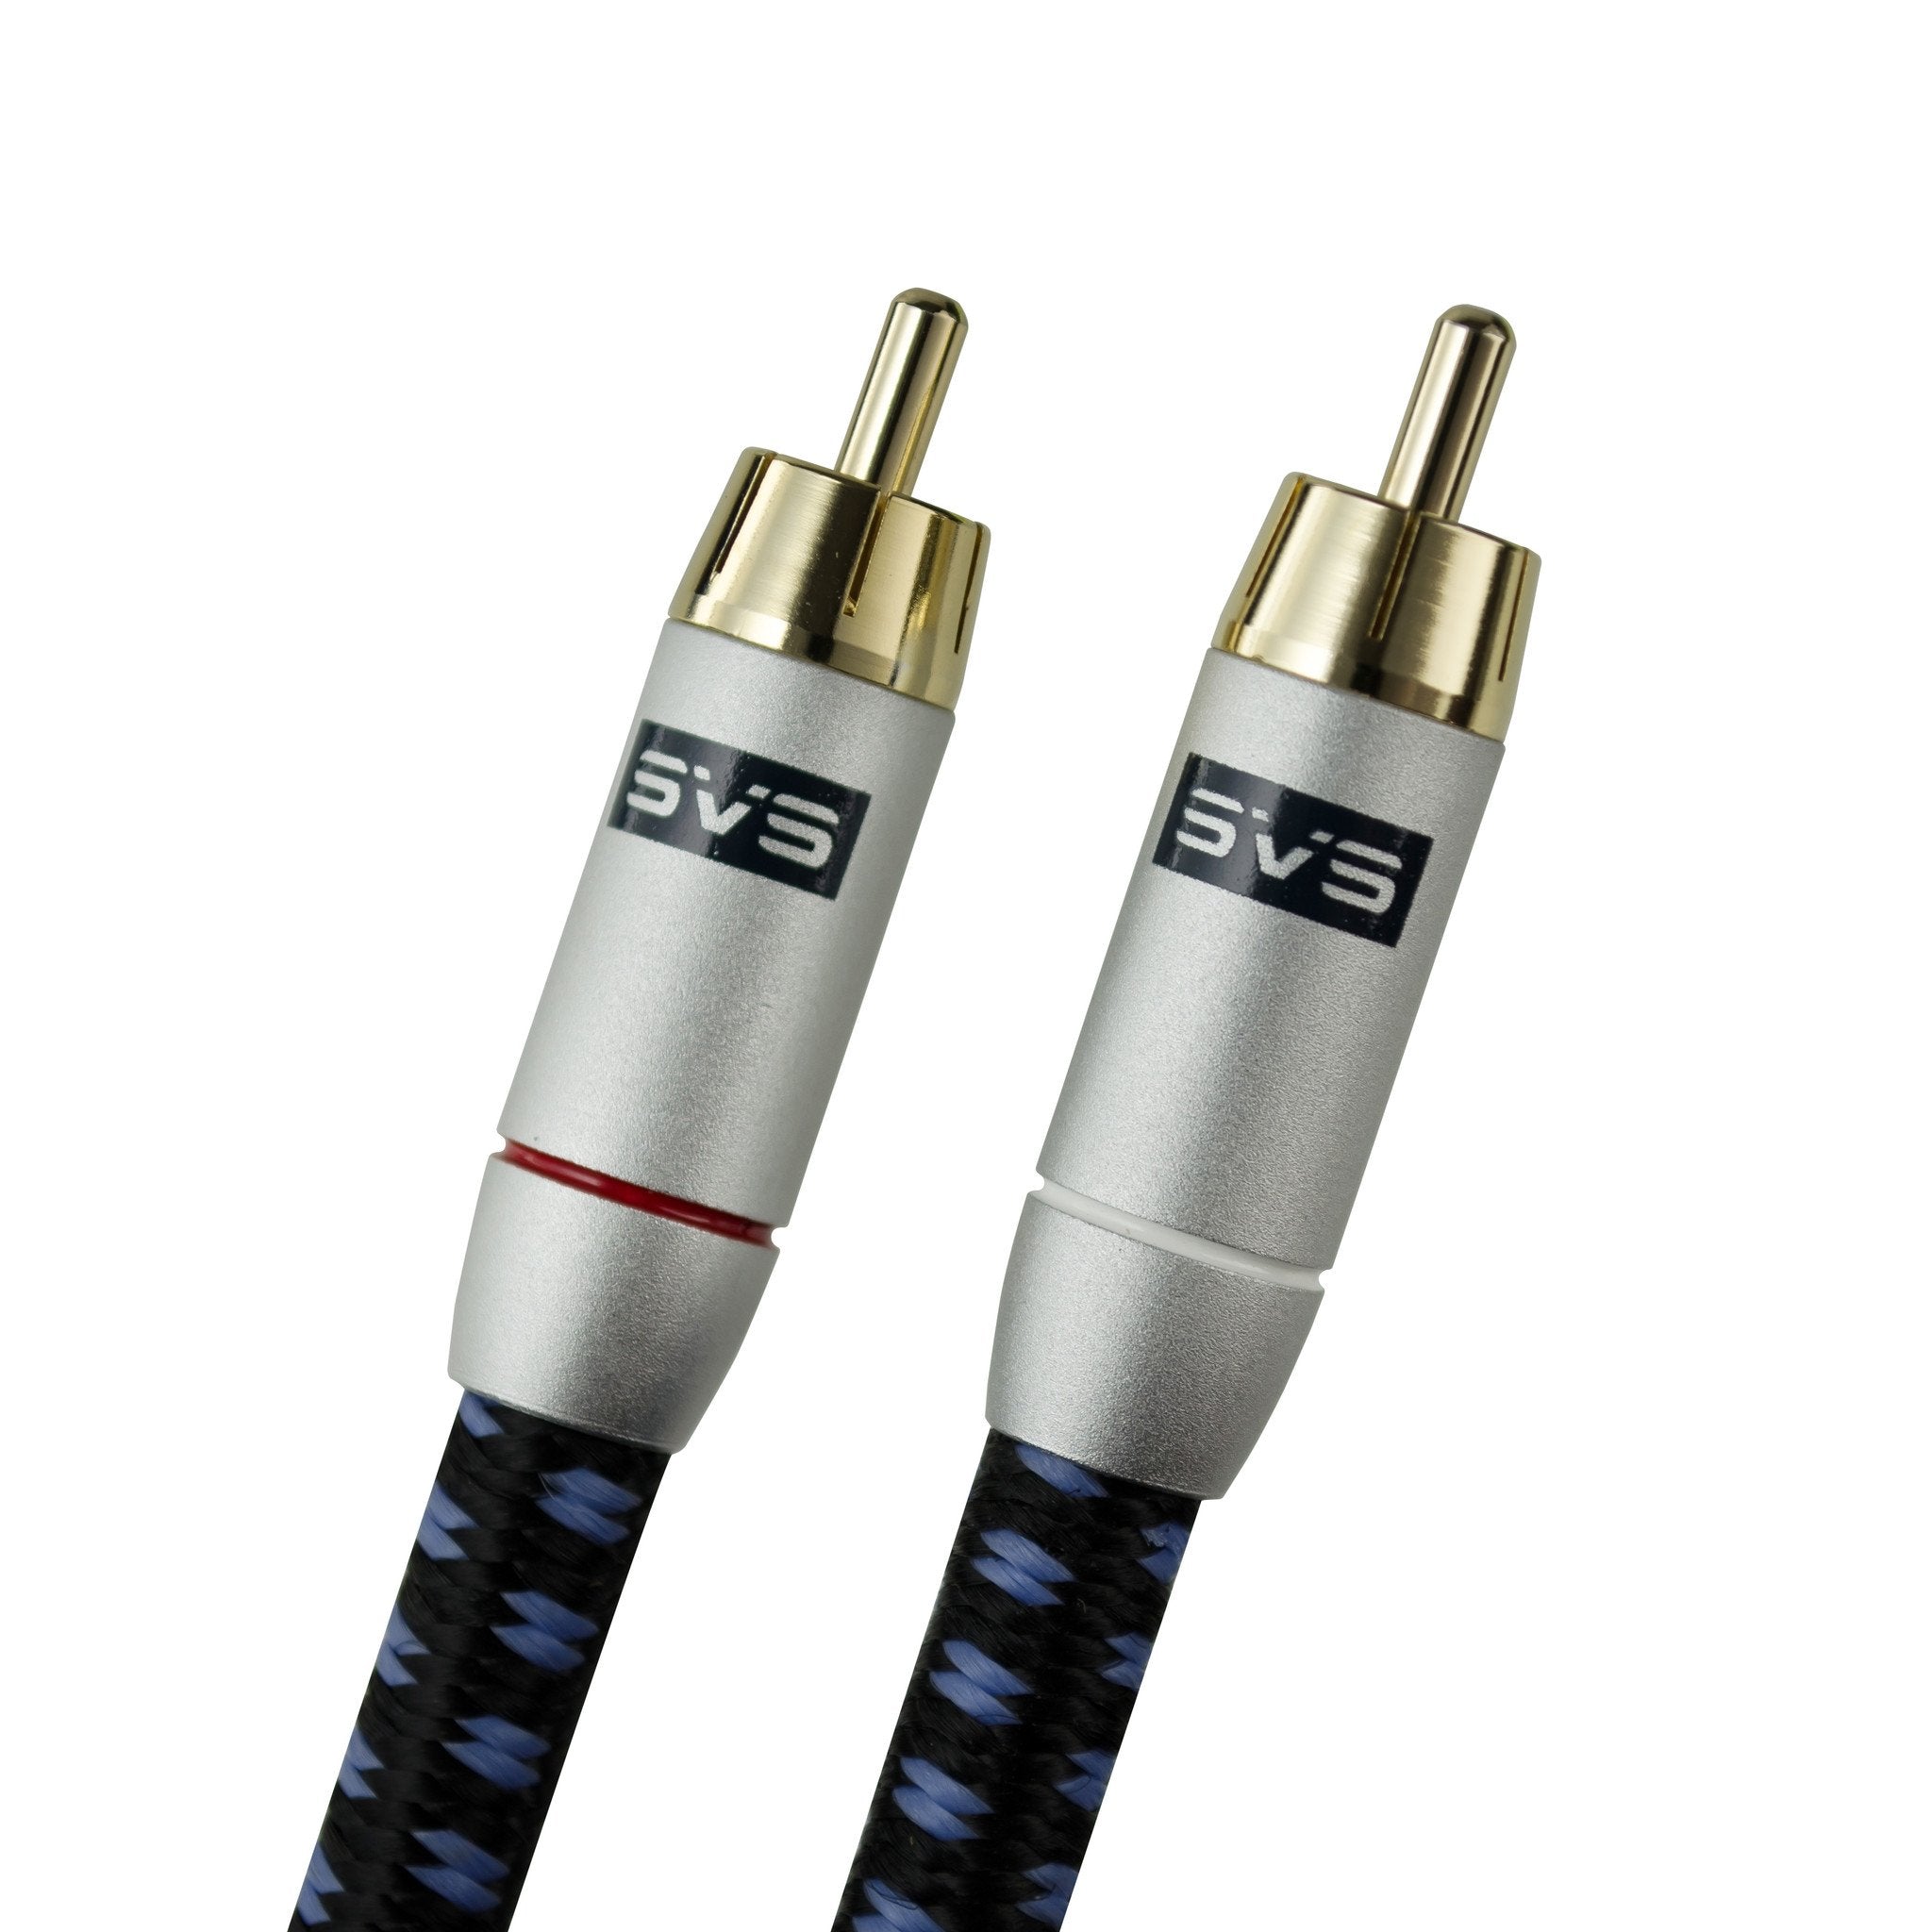 Molesto molino rock SVS SoundPath Stereo RCA Cables | RCA Cable Pair for Audio Components